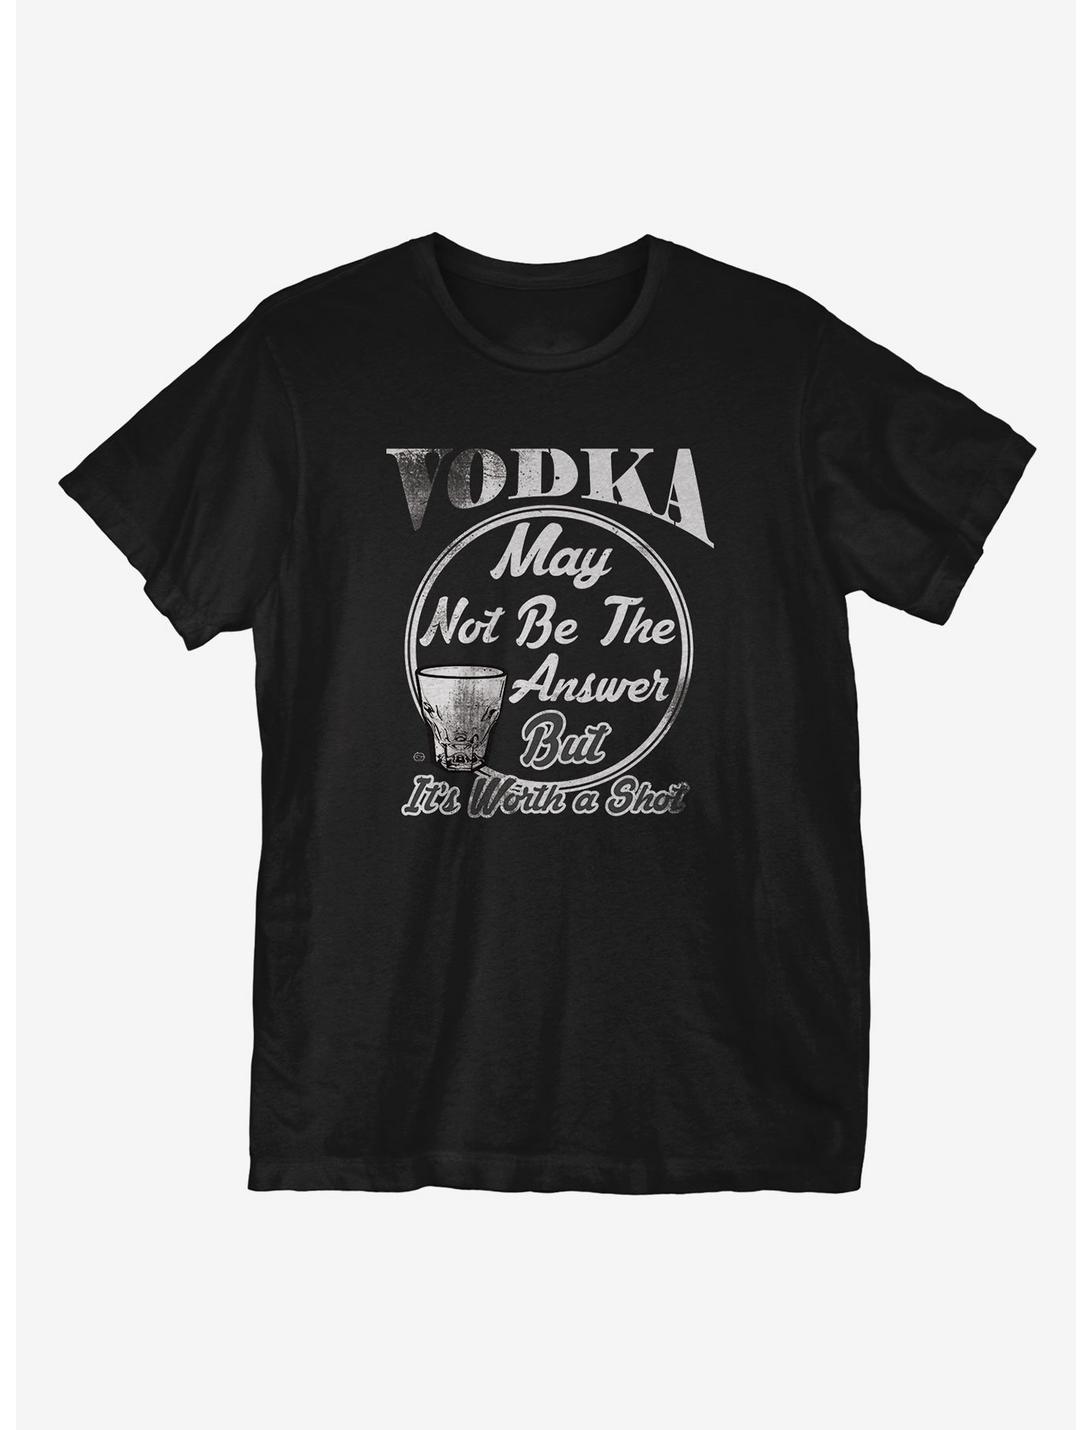 Worth A Shot Tequila T-Shirt, BLACK, hi-res